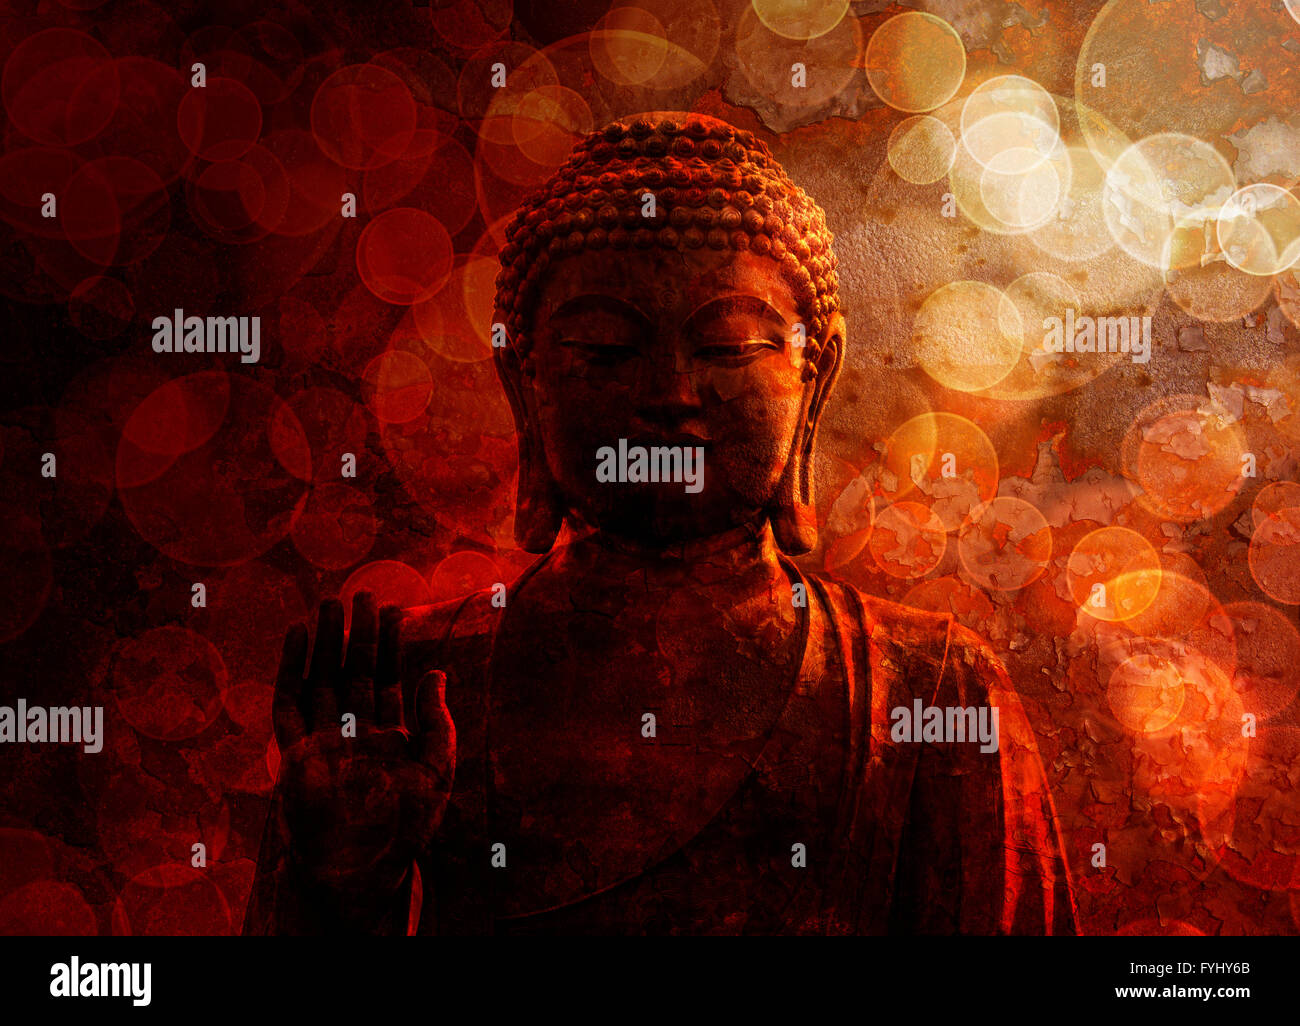 Bronze Zen Buddha Statue Raised Palm with Blurred Textured Red Background Stock Photo